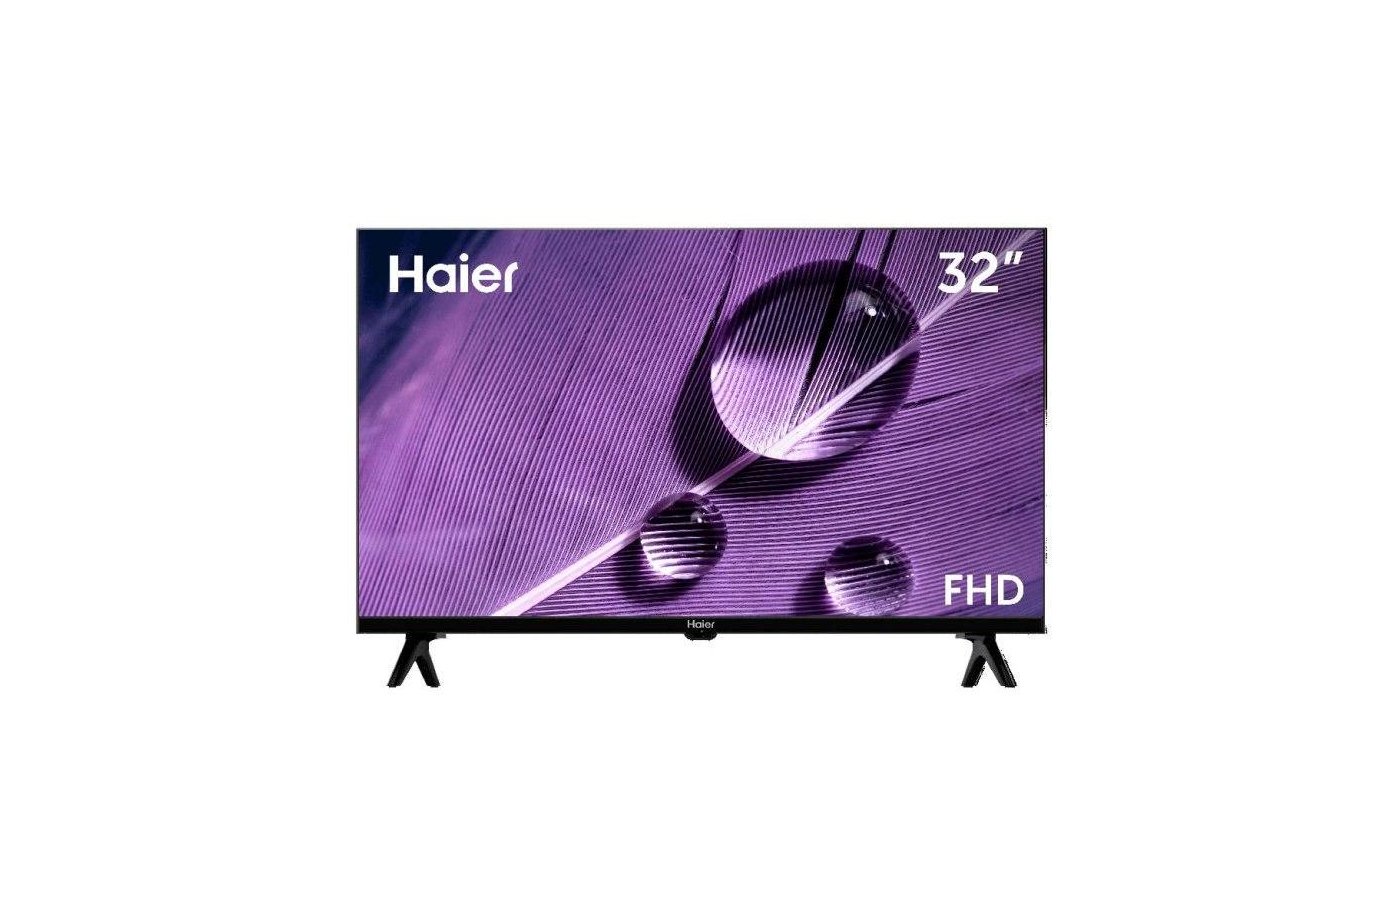 Haier 32 Smart TV s1. Телевизор Haier 55 Smart TV AX Pro. Haier 50 Smart TV AX Pro. Хаер телевизор 32 технические характеристики.